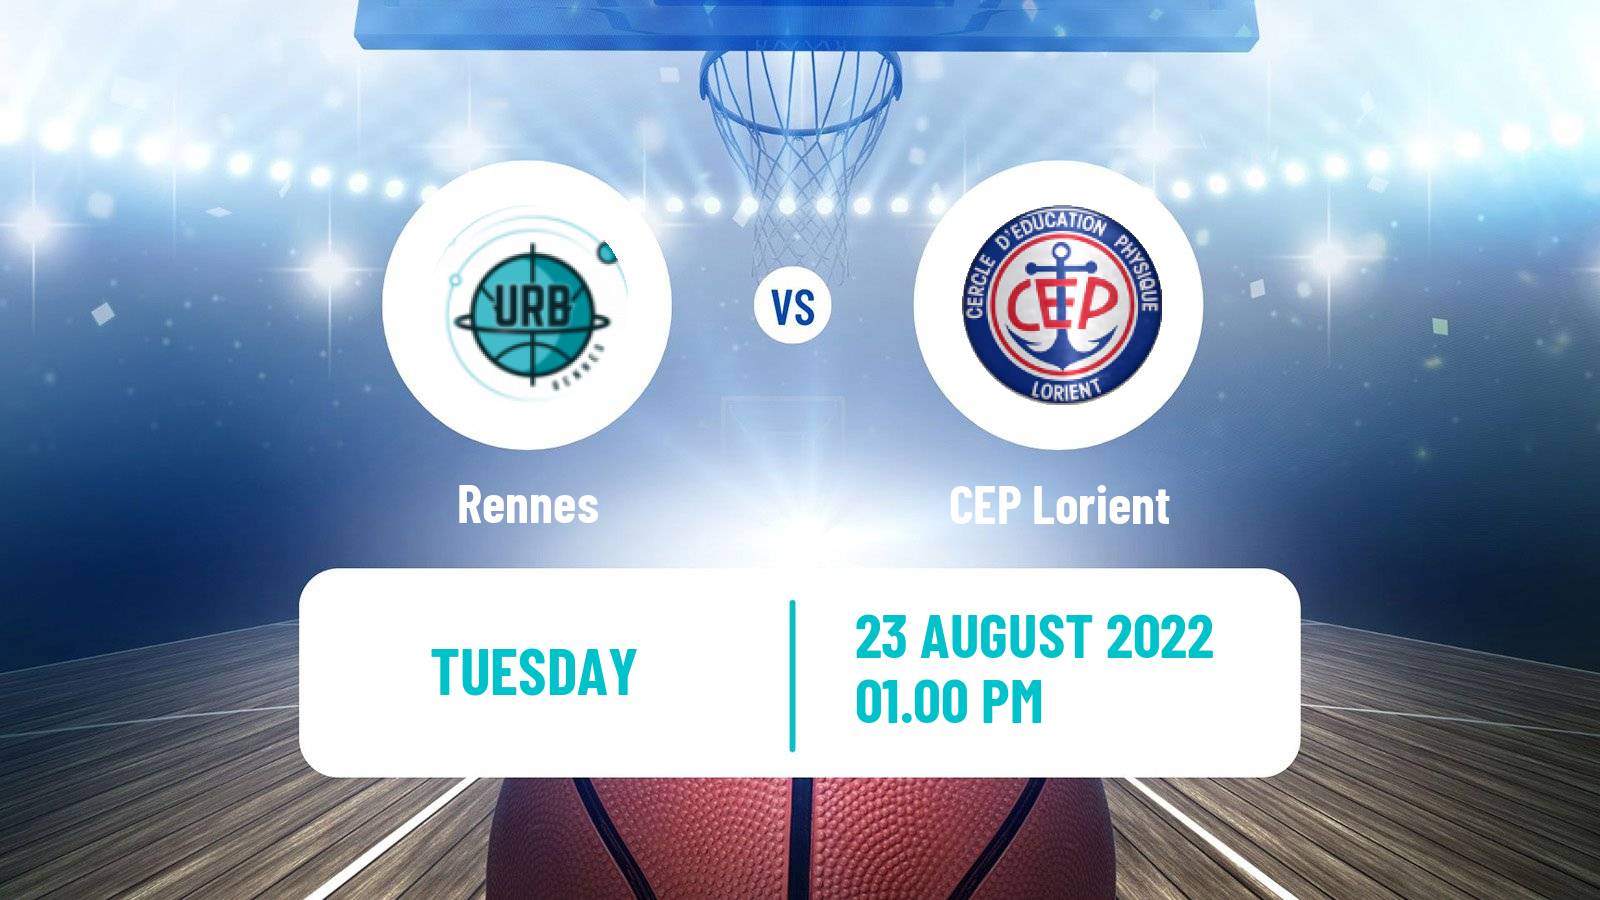 Basketball Club Friendly Basketball Rennes - CEP Lorient